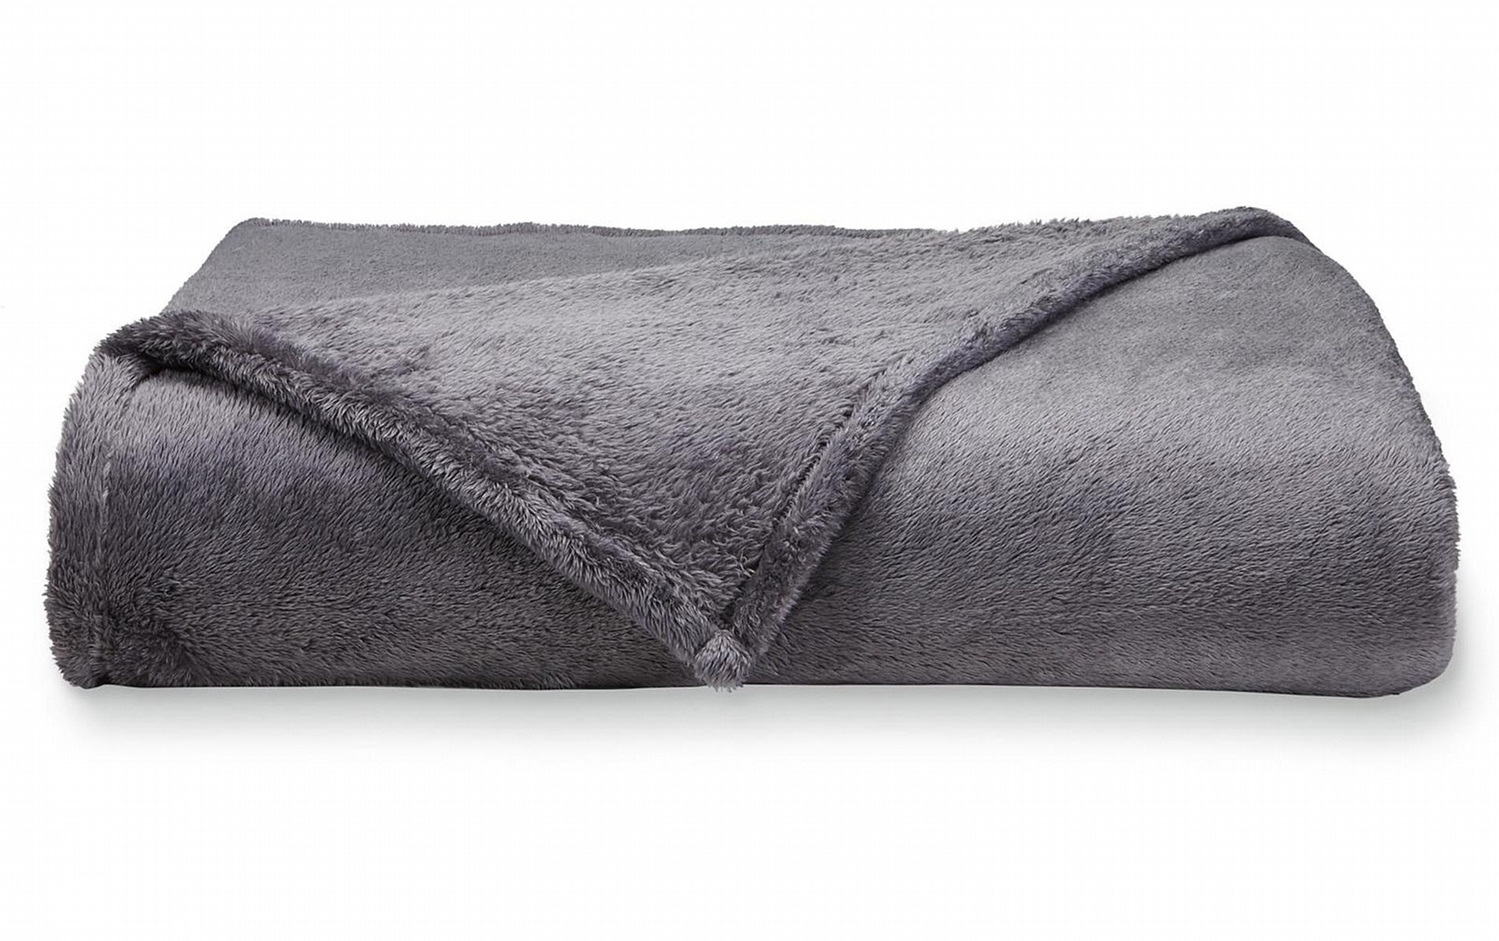 a grey fleece blanket